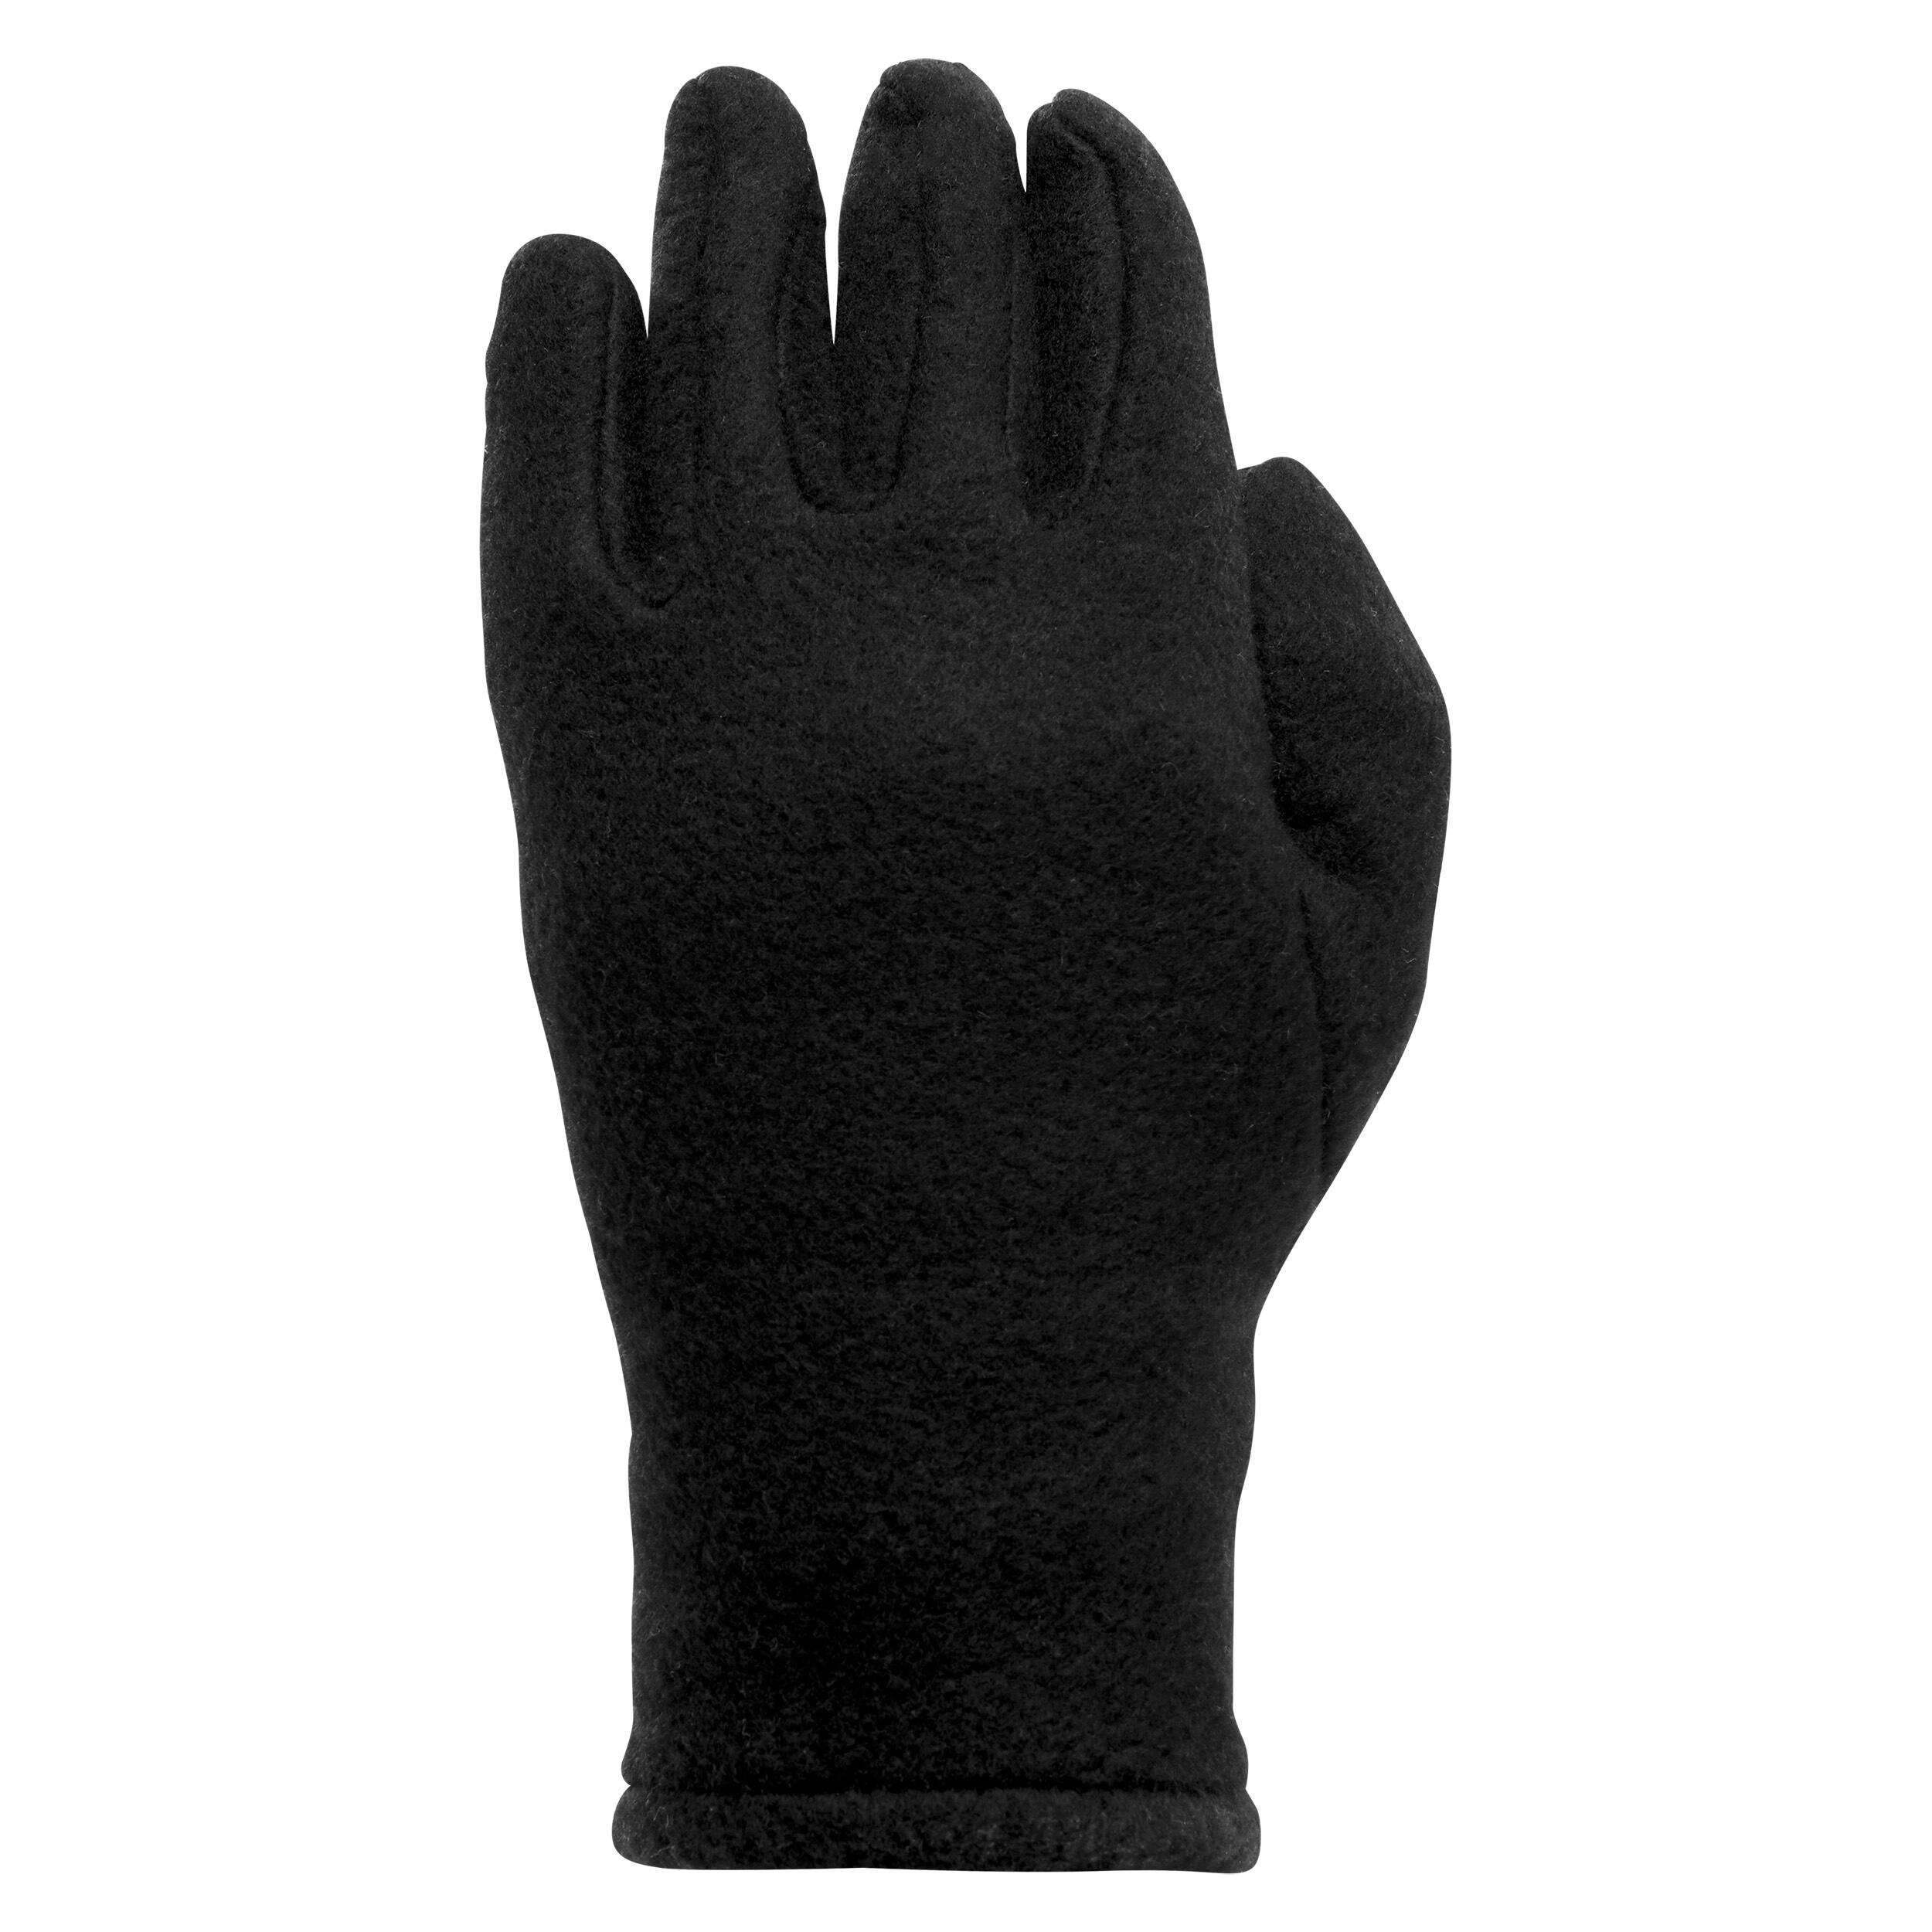 Mănuși din polar Negru SH100 negru Copii 4-14 ani